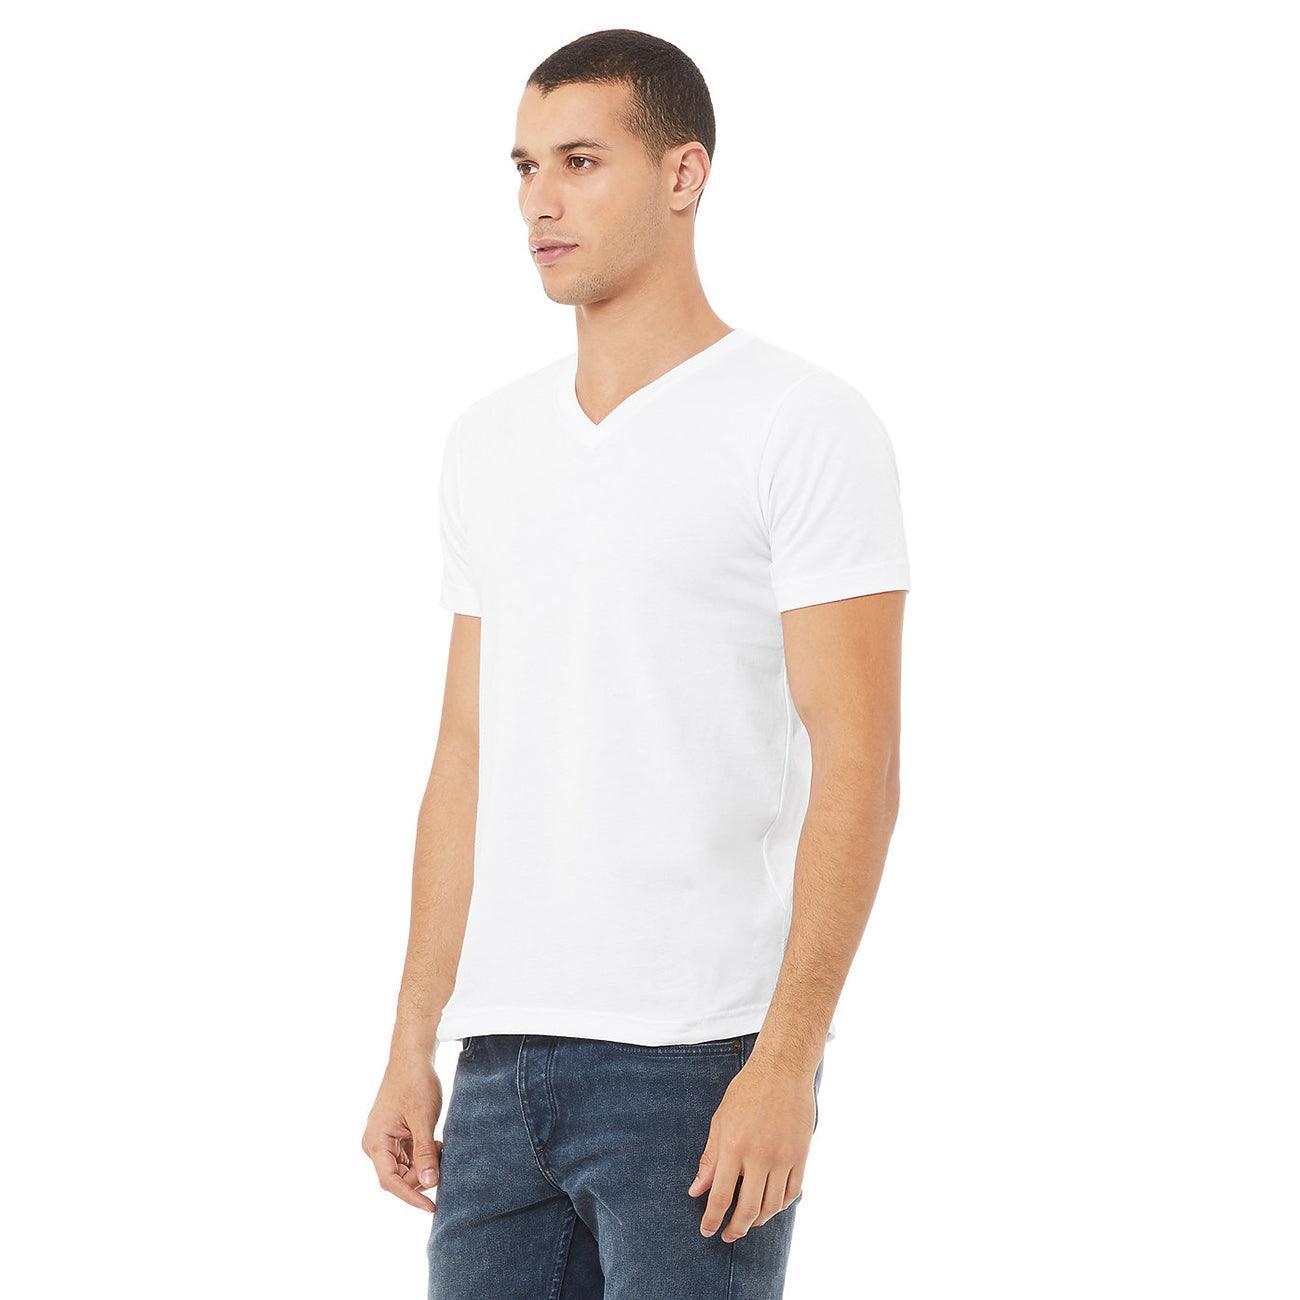 Men's V-Neck Soft Cotton T-Shirt Minor Fault (CS-120304) - Brands River